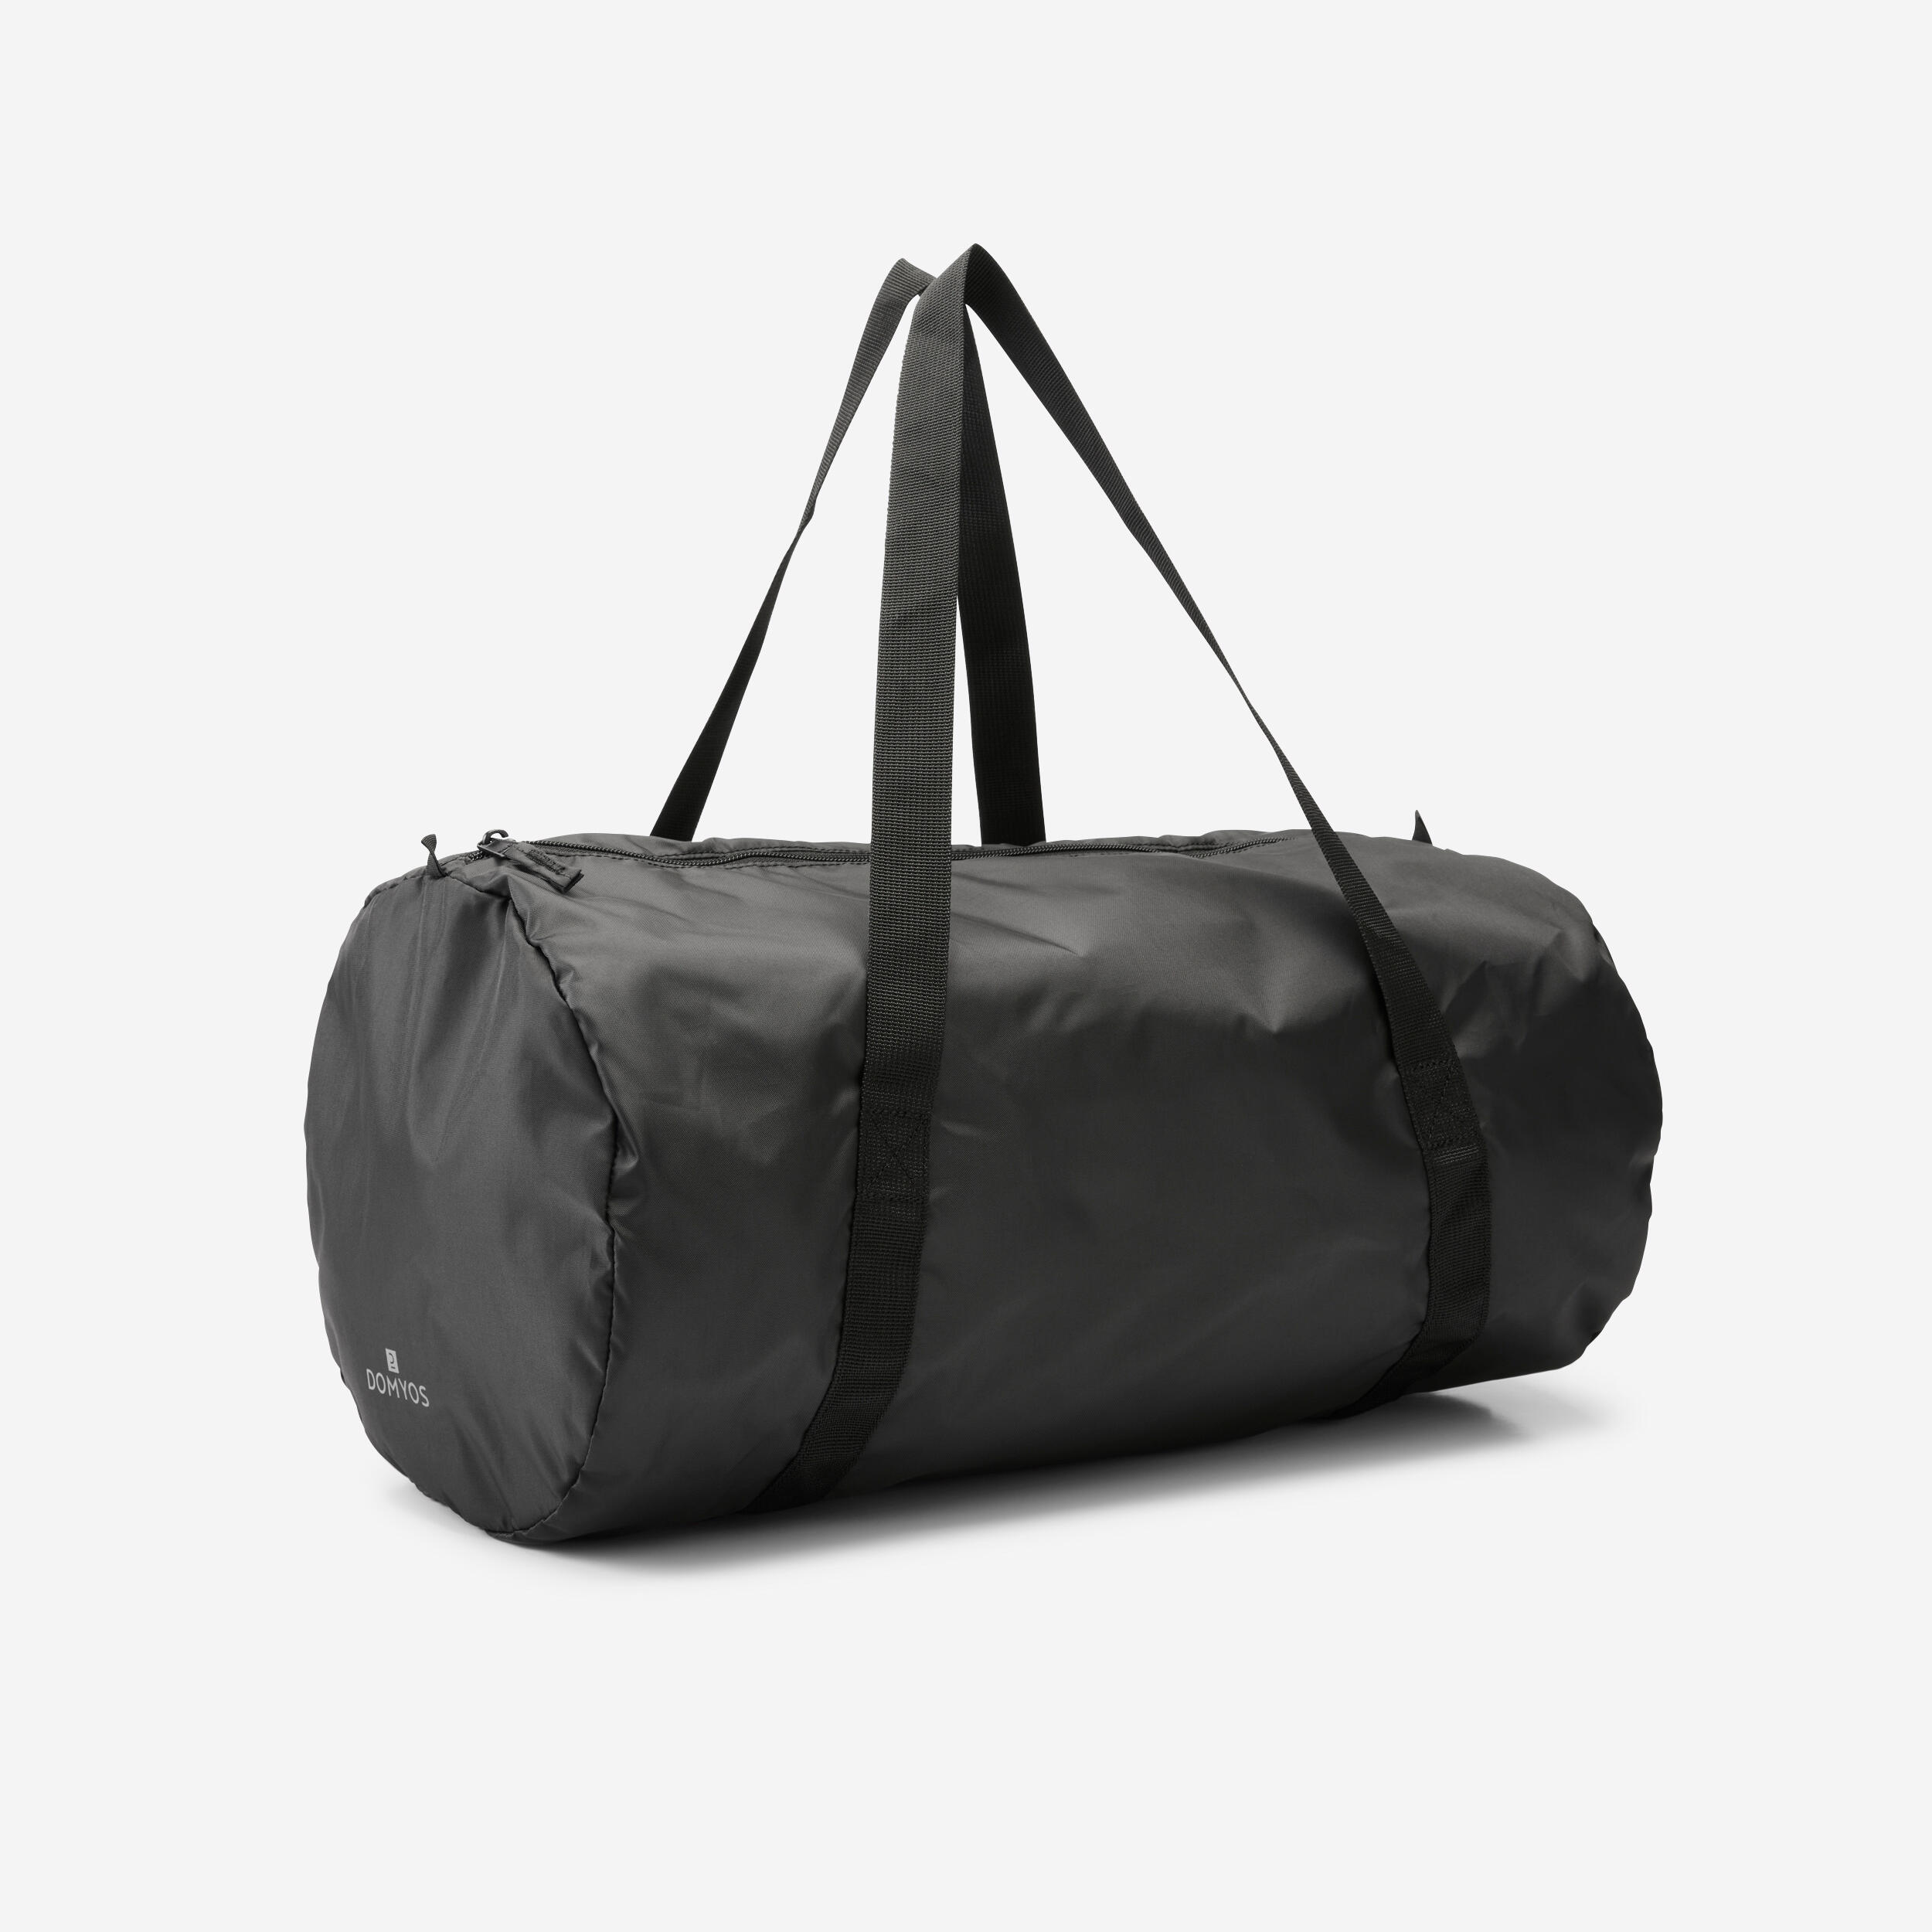 DECATHLON KIPSTA Essential Sports Bag - 75L | Catch.com.au